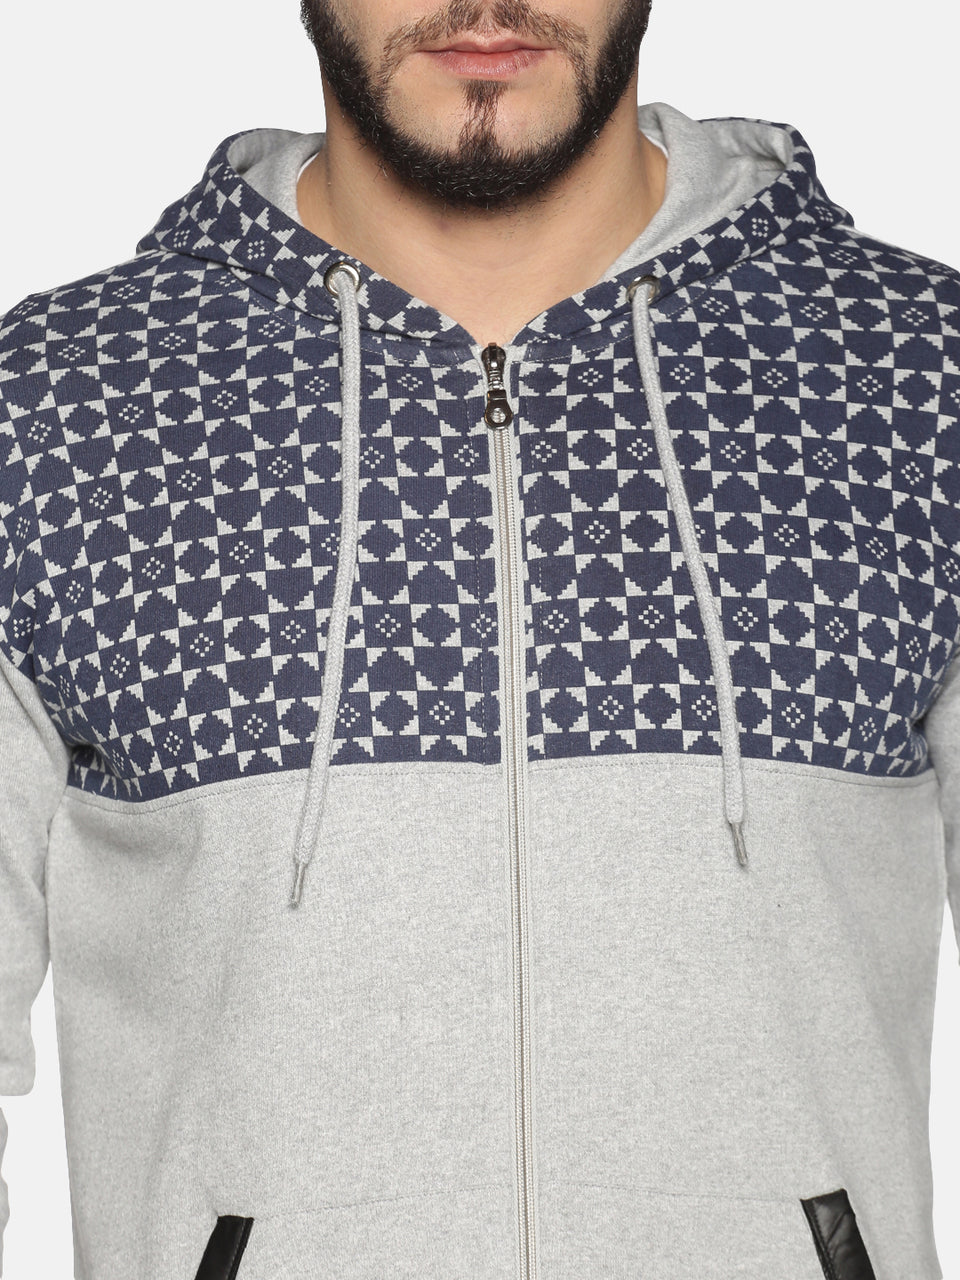 Men Grey Navy Blue Printed Hooded Neck Full Sleeve Casual Front Open Zipper Hoodies Sweatshirt